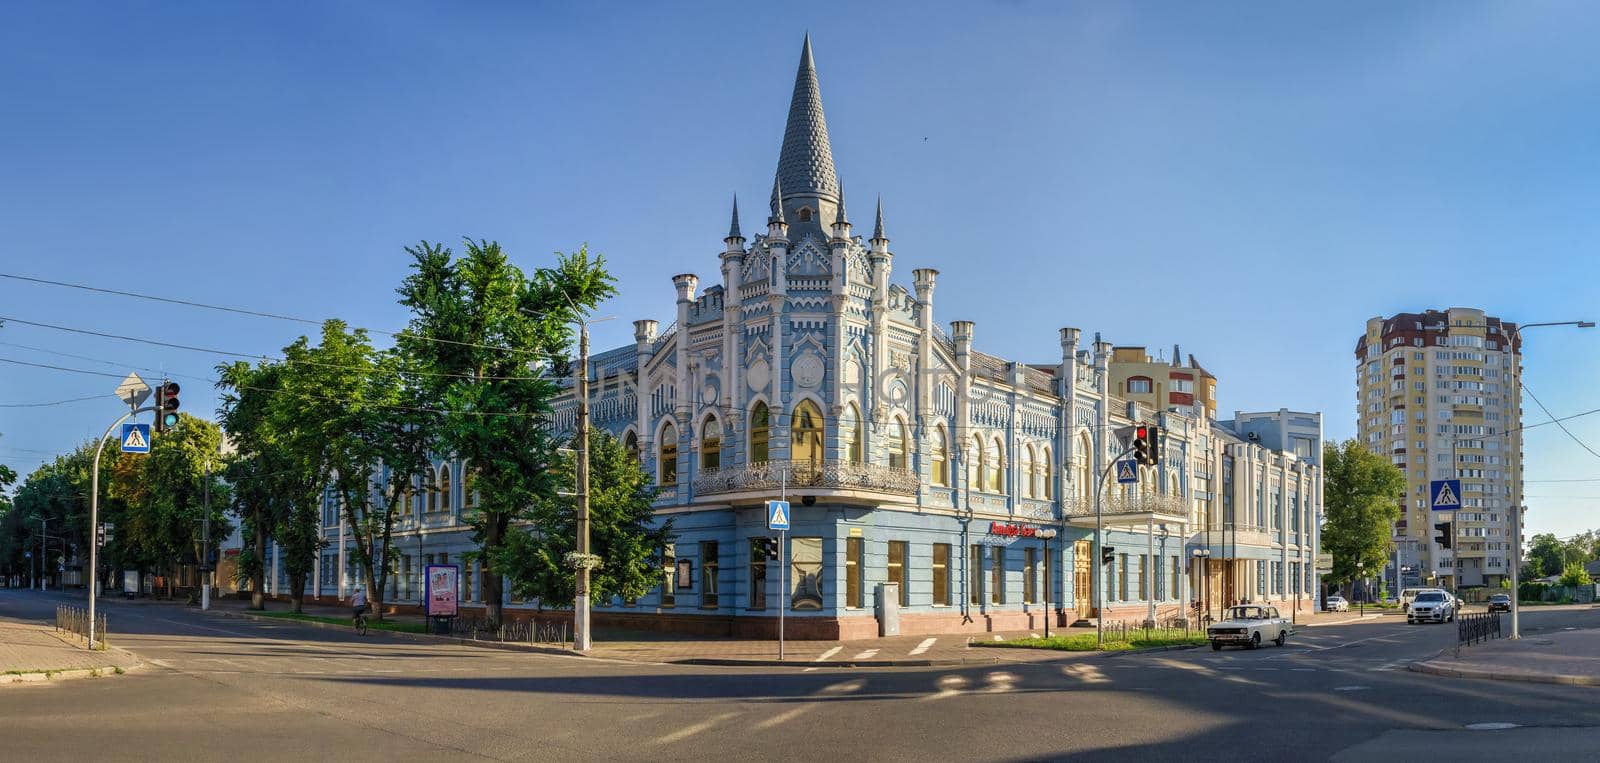 Historical building in Cherkasy, Ukraine by Multipedia